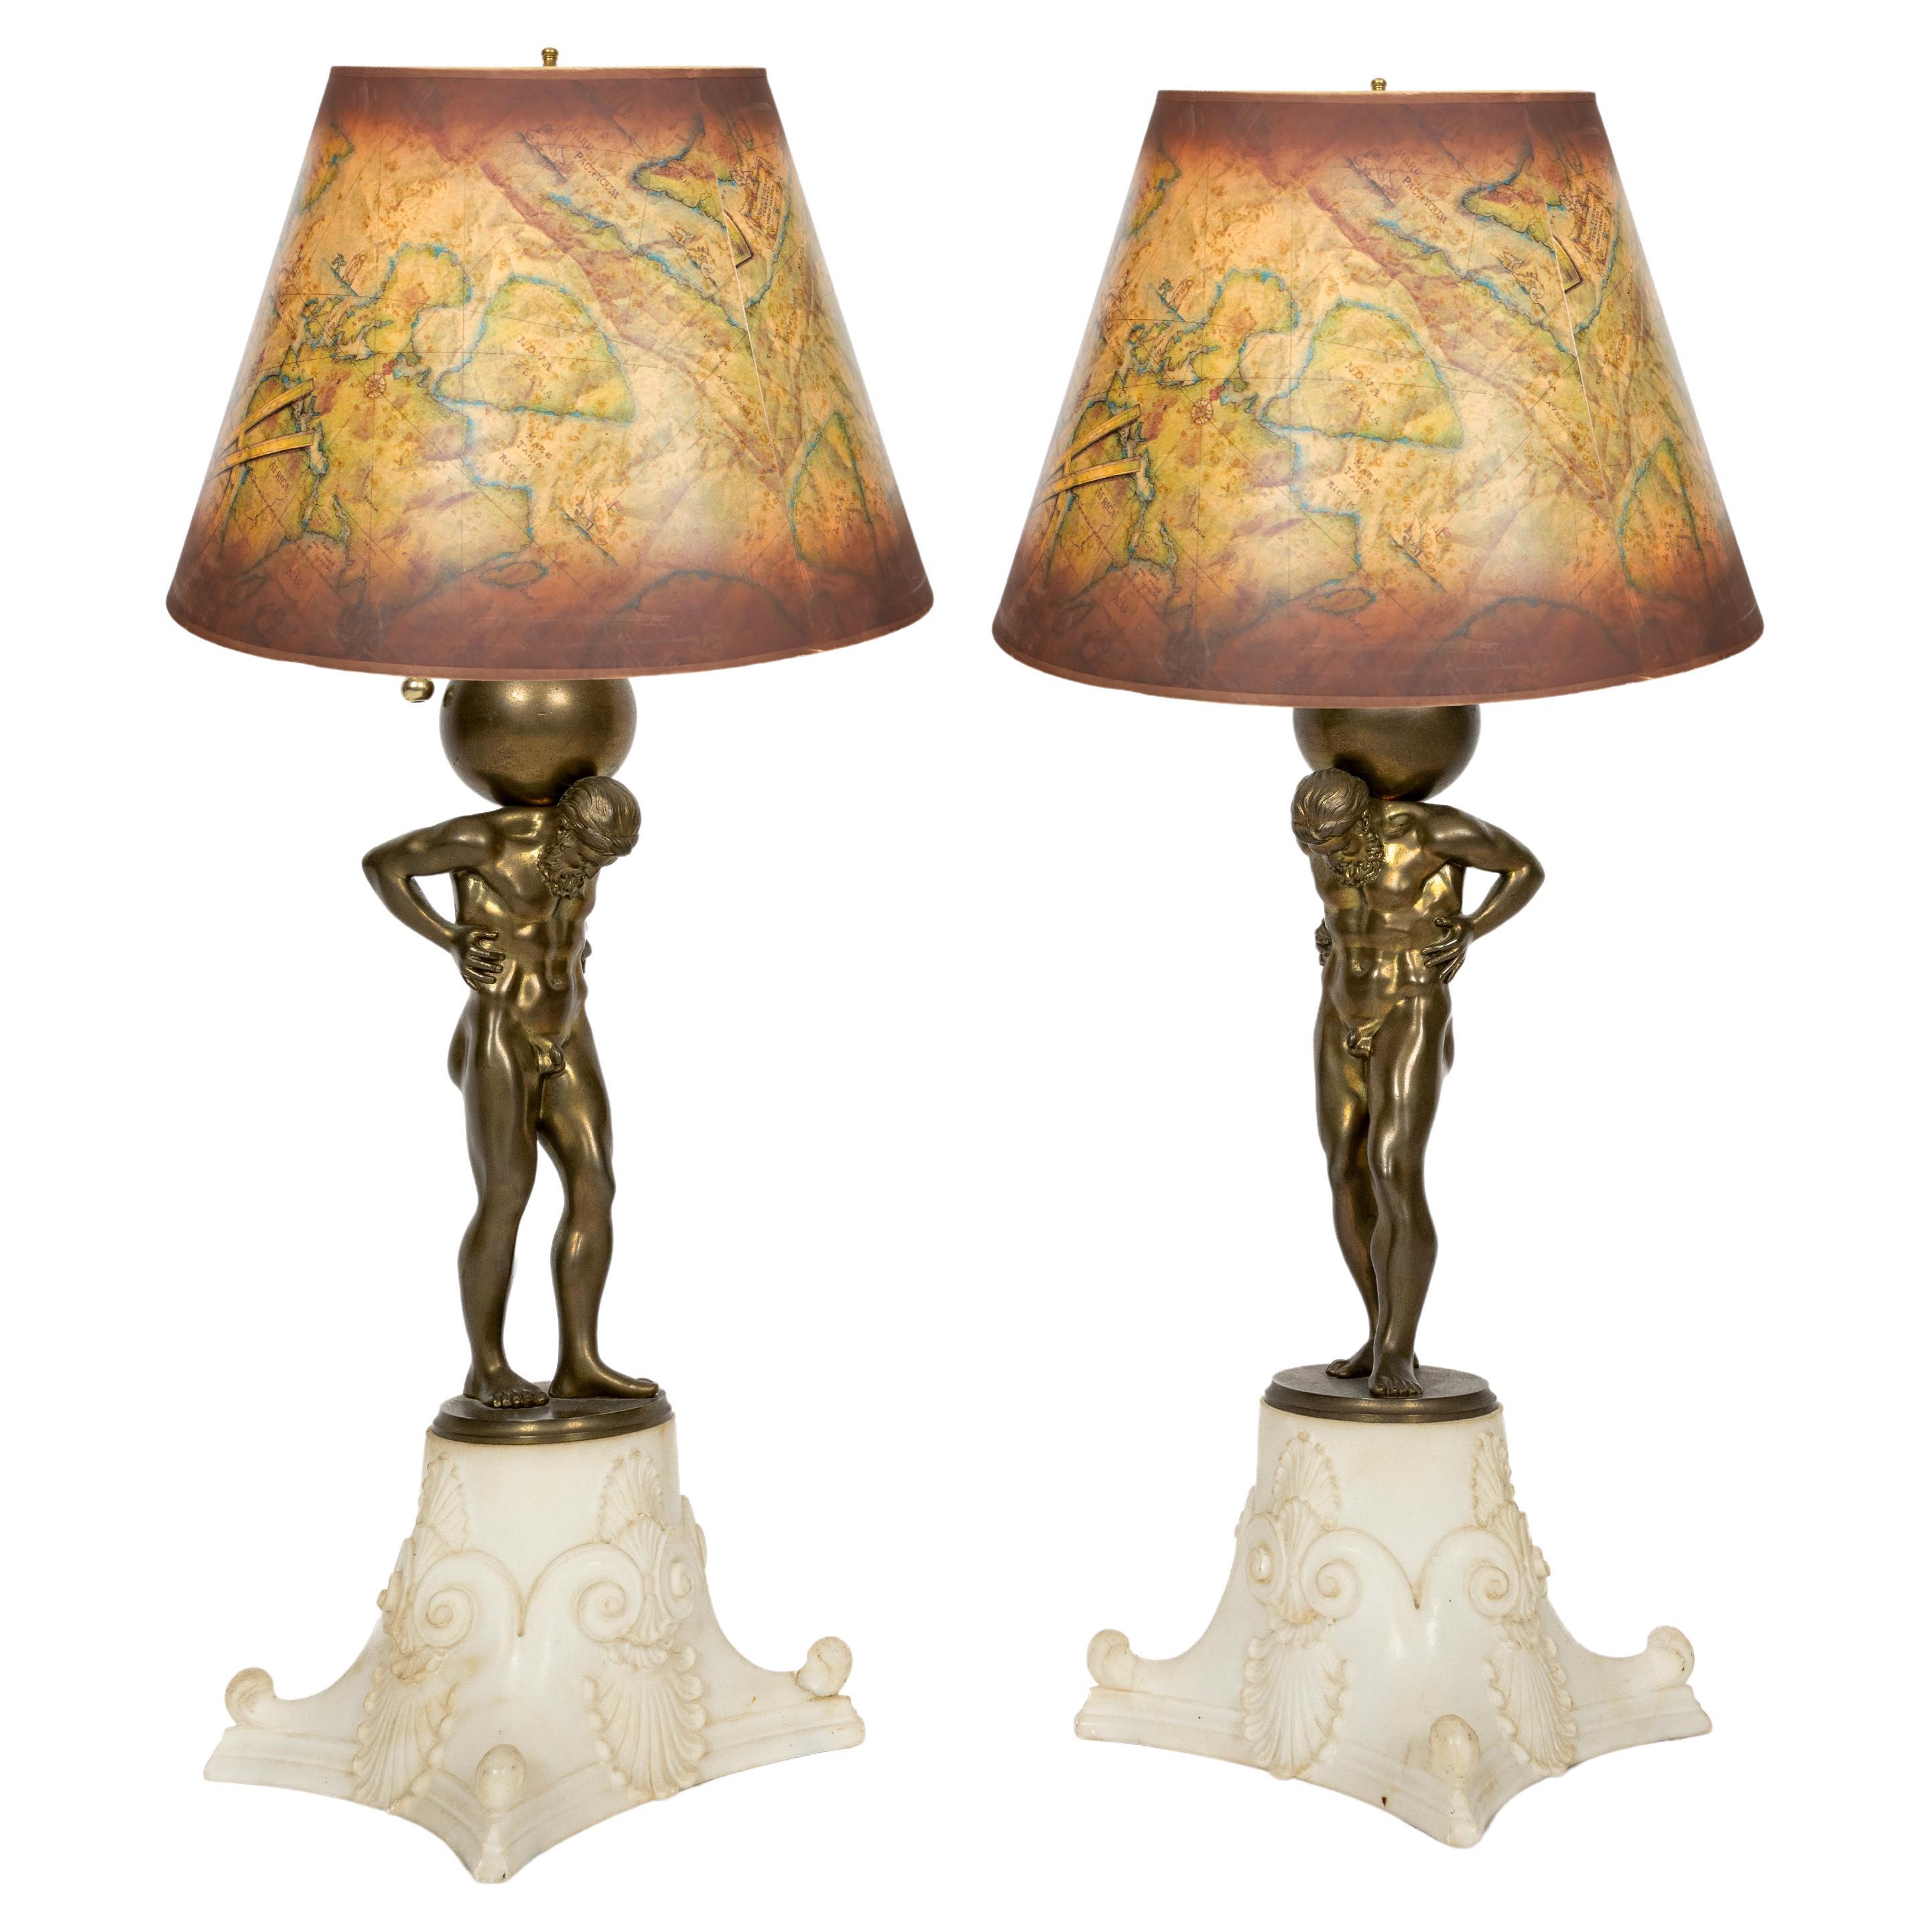 Pair of Atlas Table Lamps